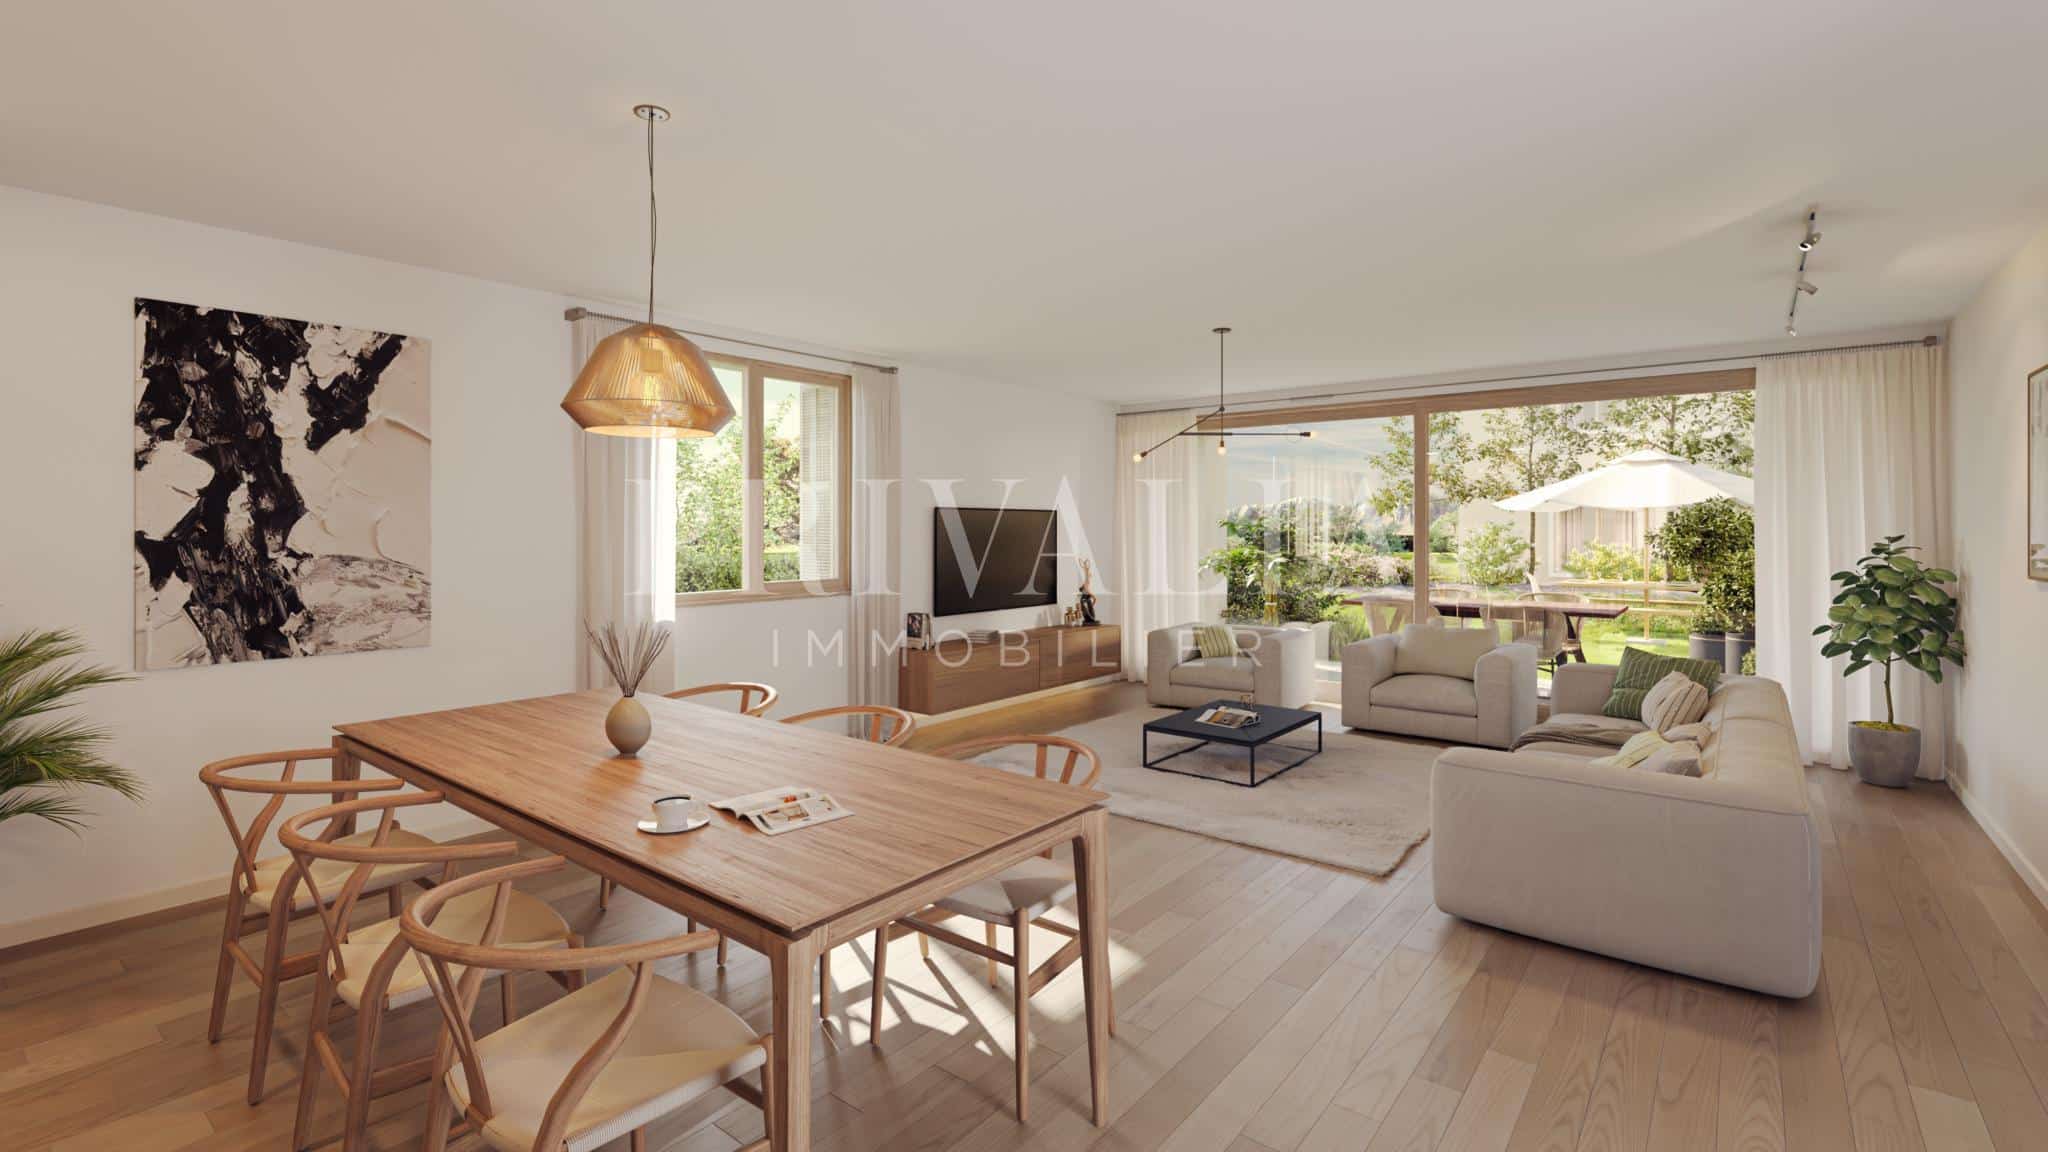 PrivaliaNew 5-room THPE apartment on garden level – Collex-Bossy